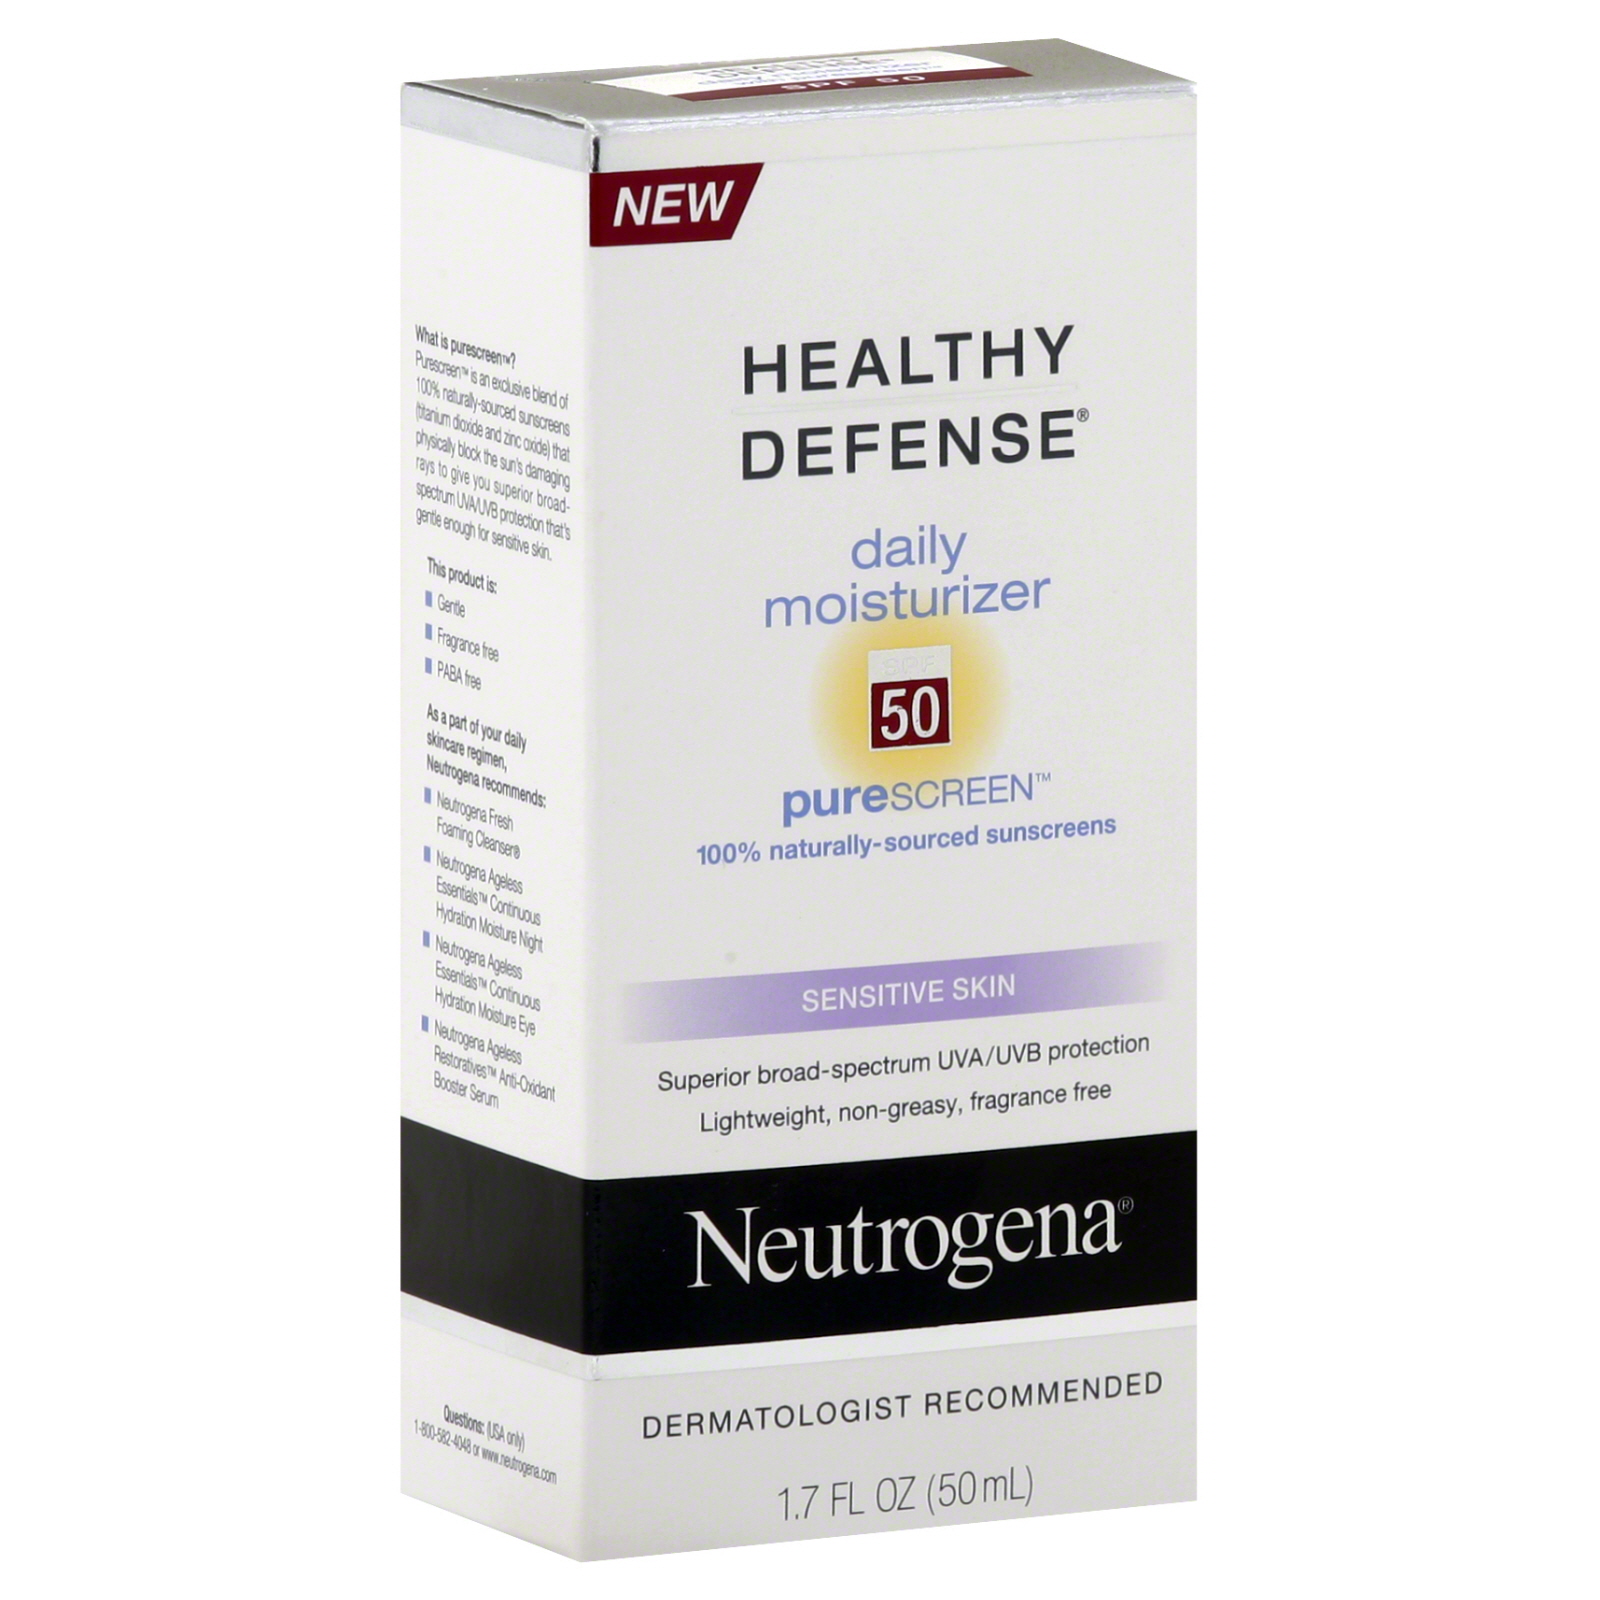 Neutrogena Healthy Defense Moisturizer, Daily, Sensitive Skin, 1.7 fl oz (50 ml)